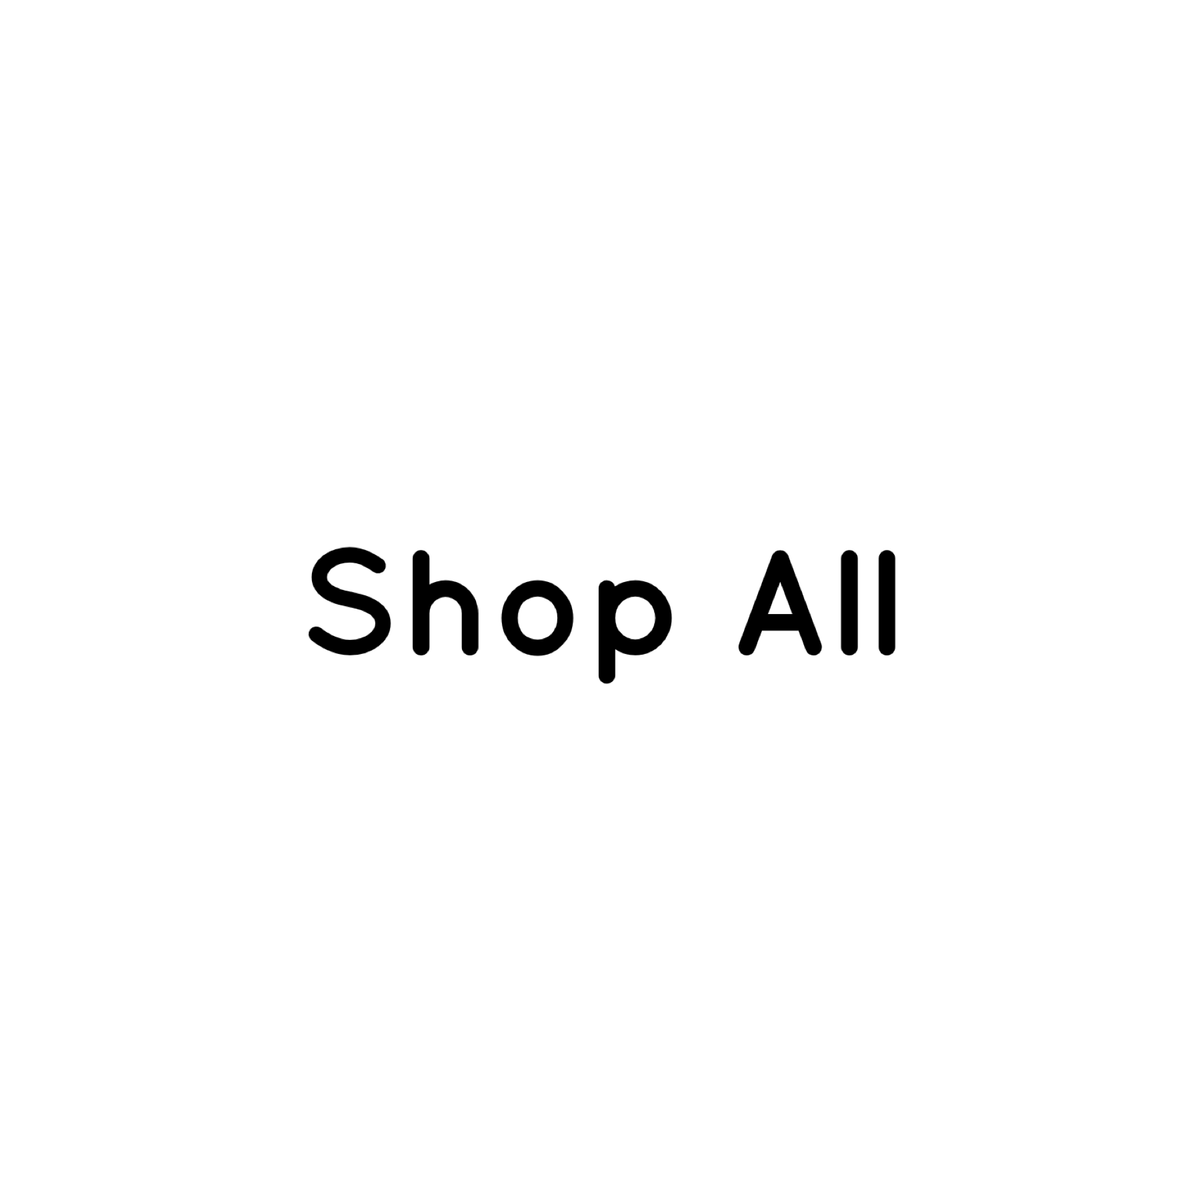 Shop All – Caryn Michelle Designs